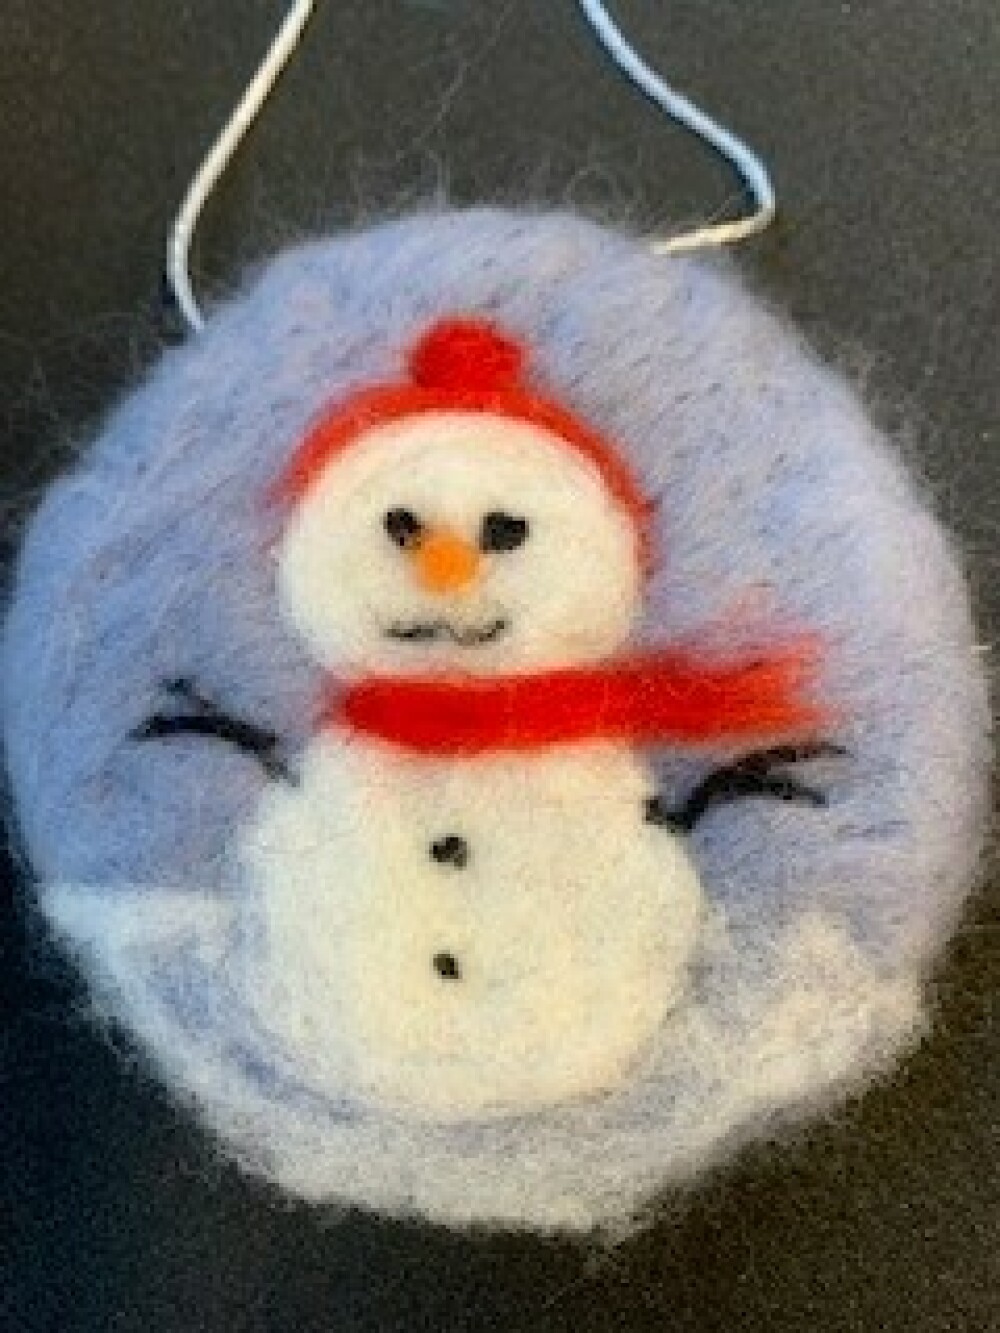 Felted Snowman Christmas Ornament